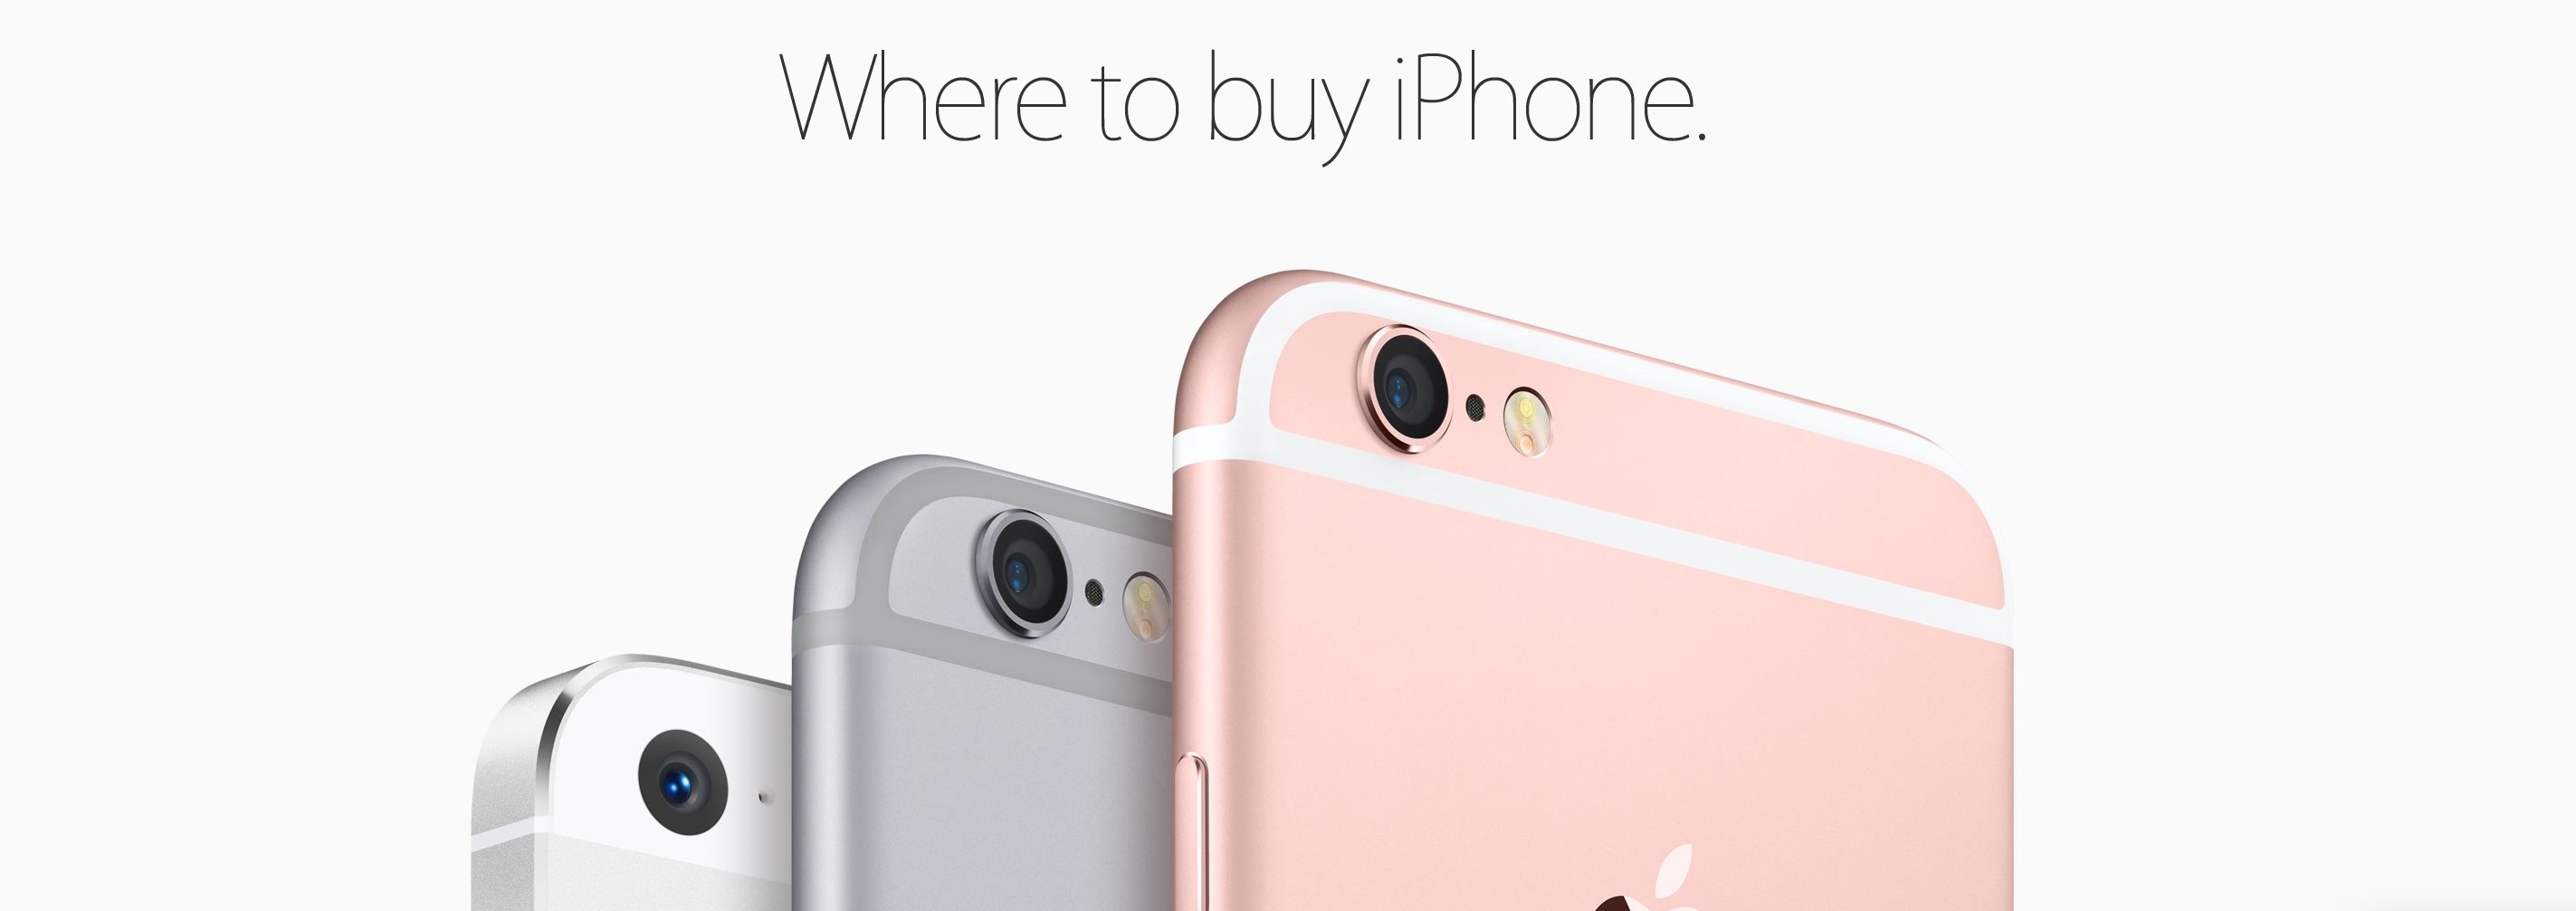 Apple iPhone: US-Kunden kaufen mehr über Mobilfunkanbieter 1